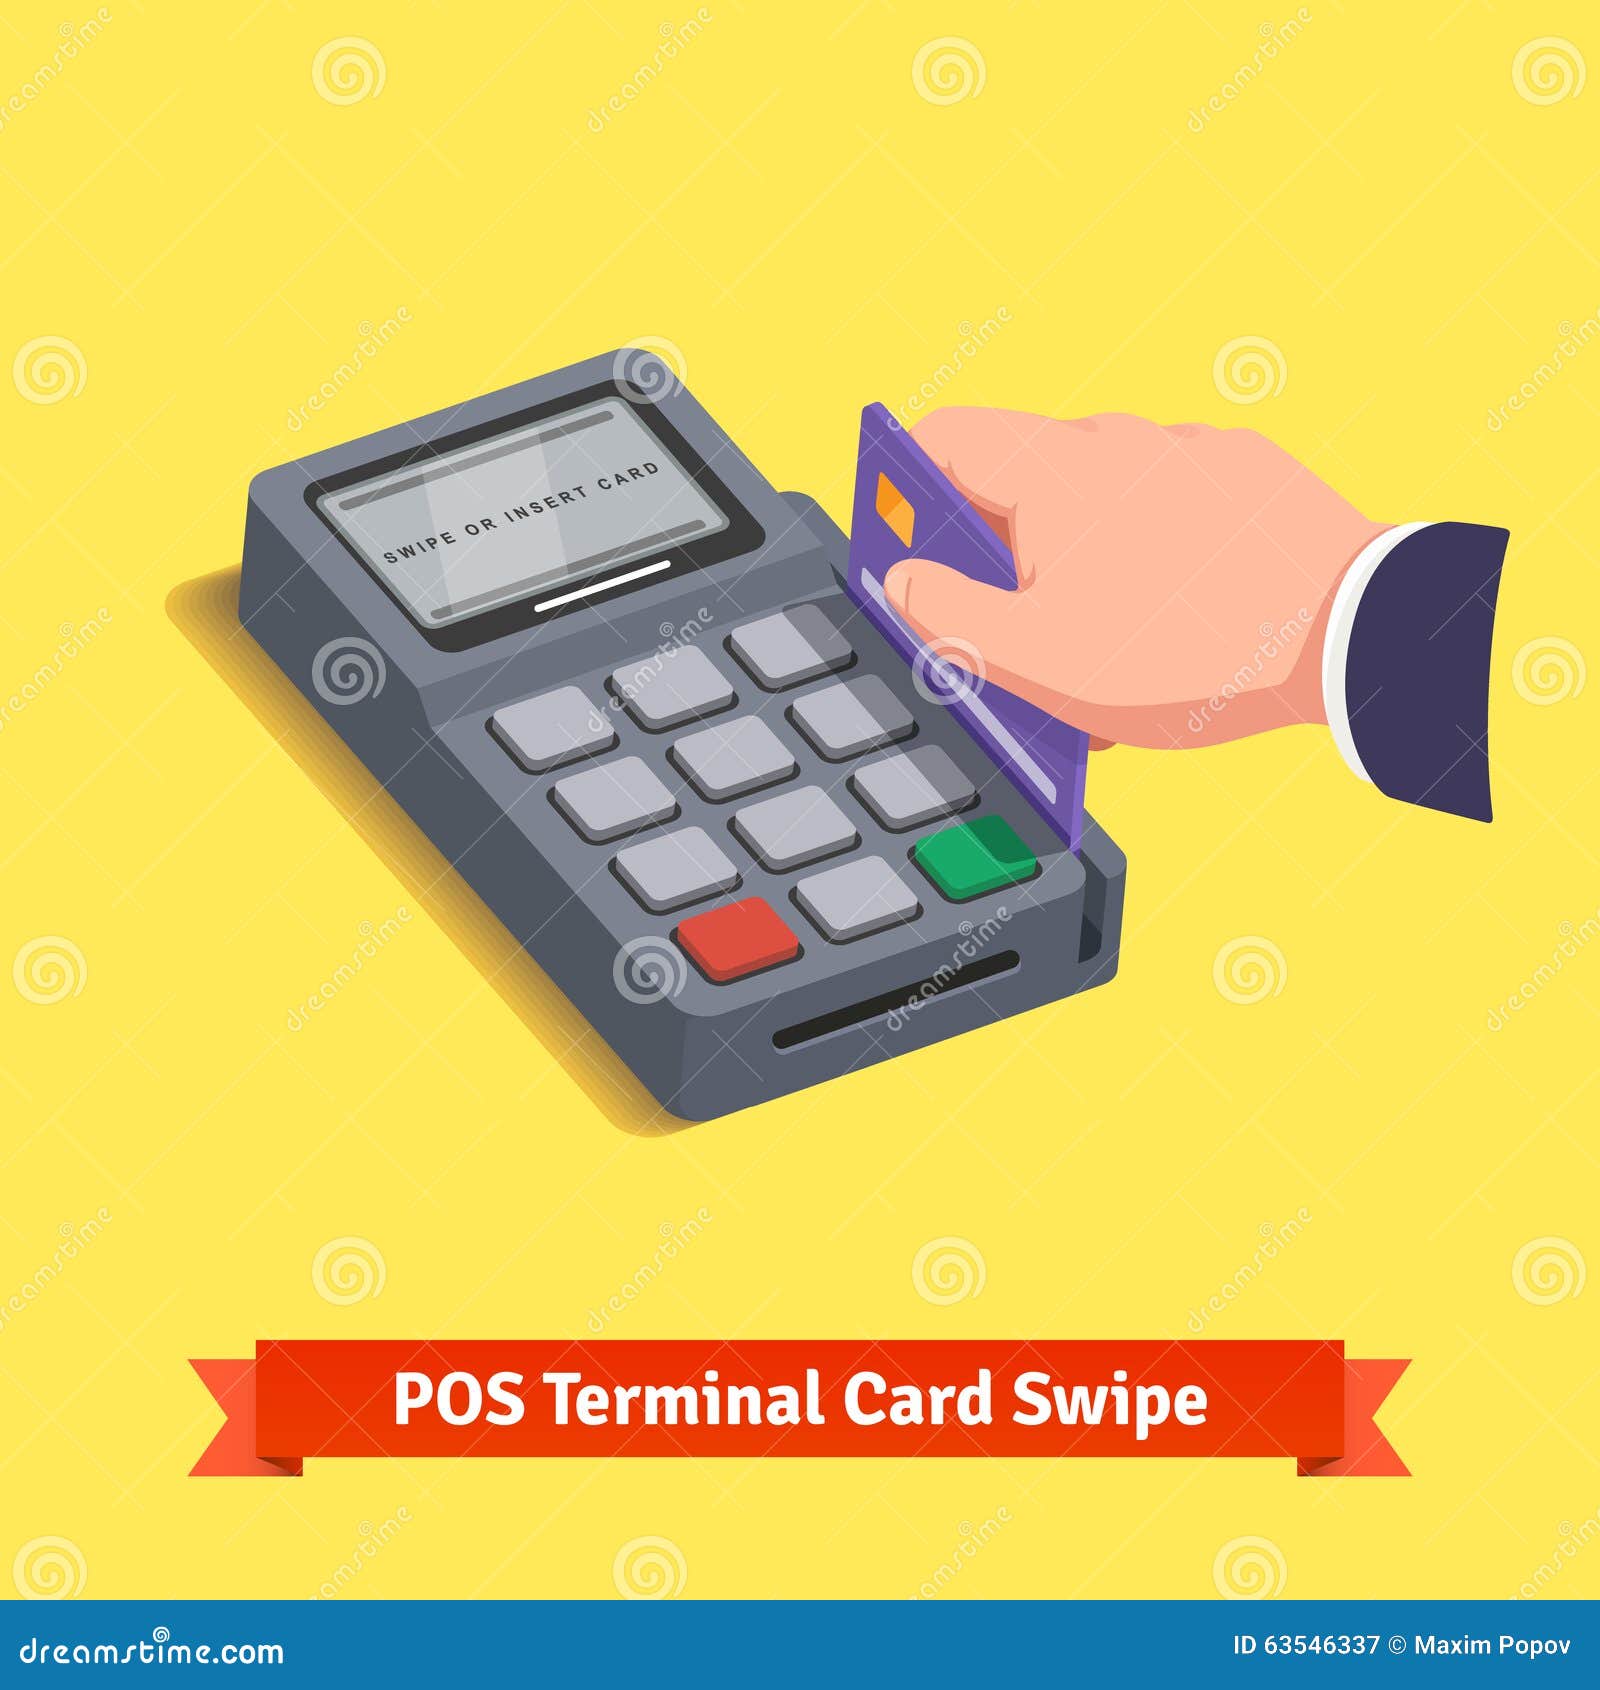 pos terminal transaction. hand swiping credit card